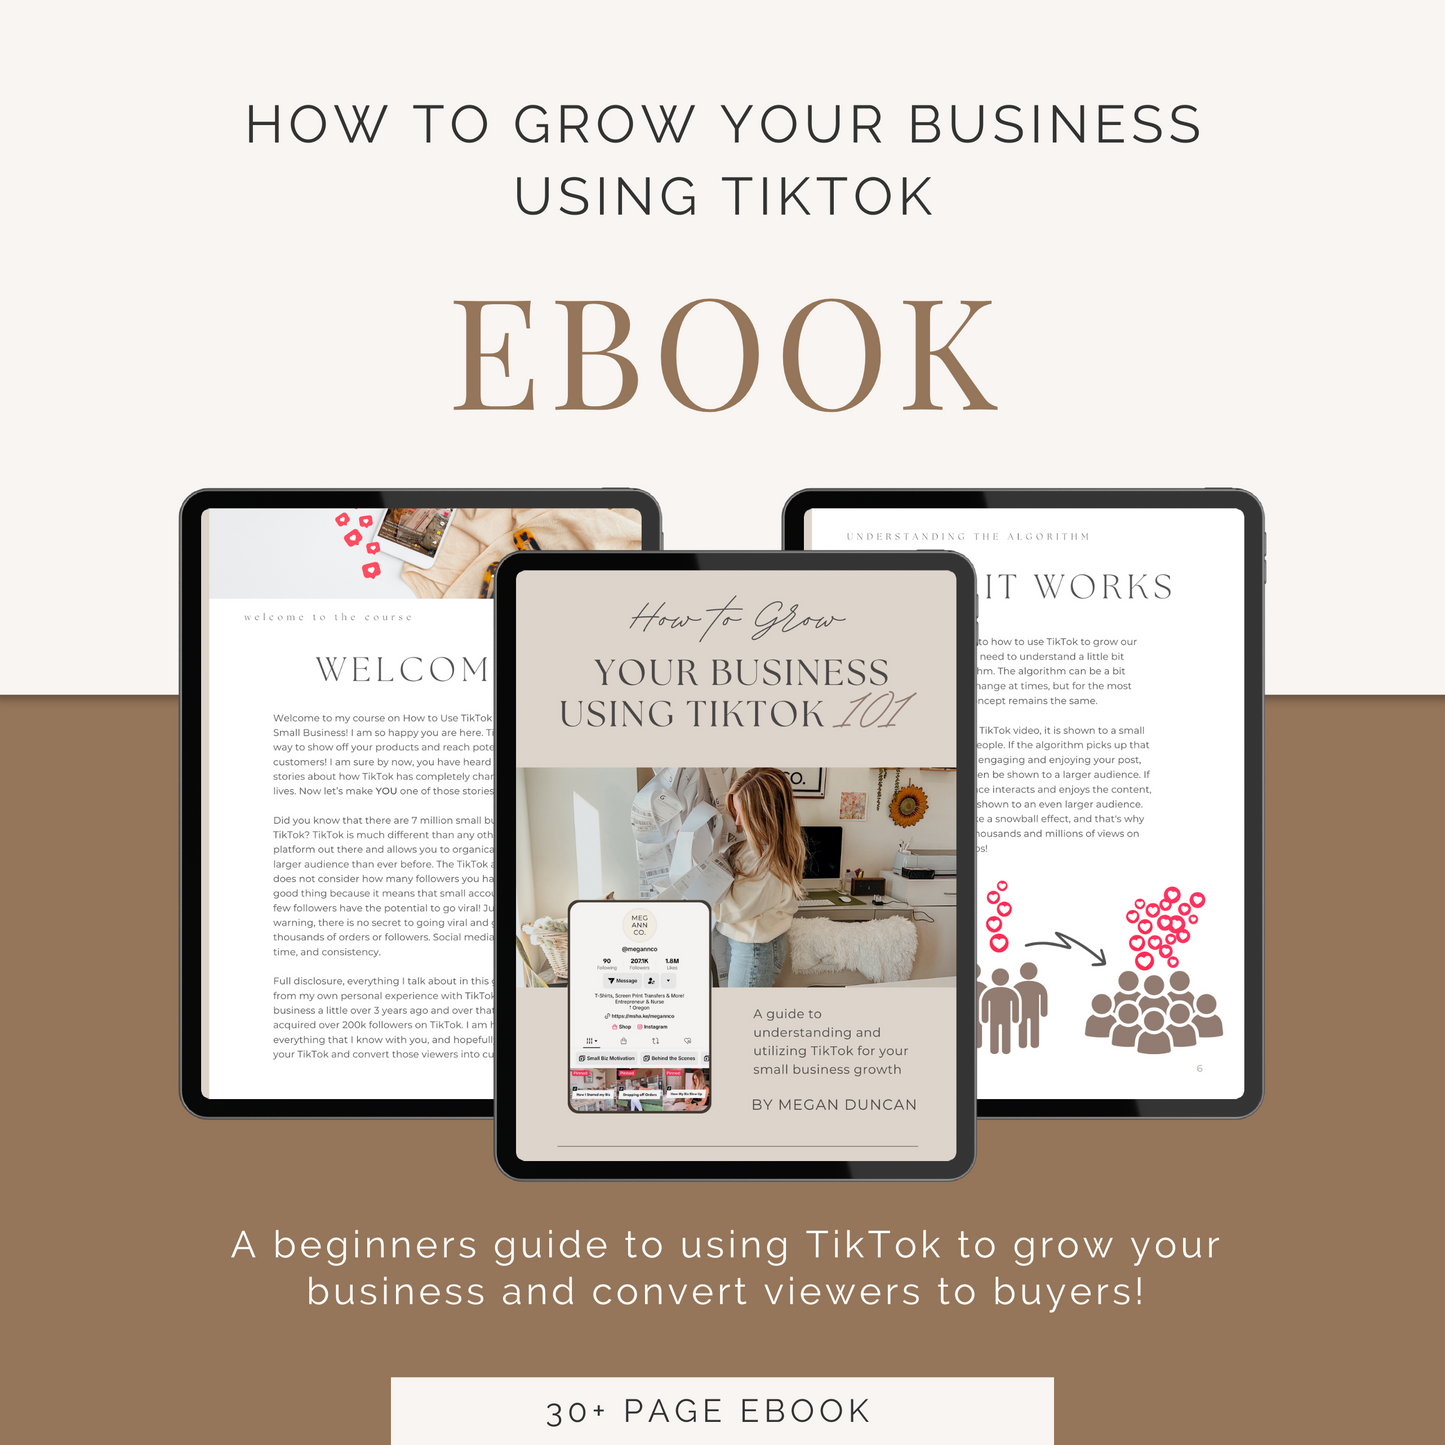 How to Grow Your Business Using TikTok 101 - Ebook